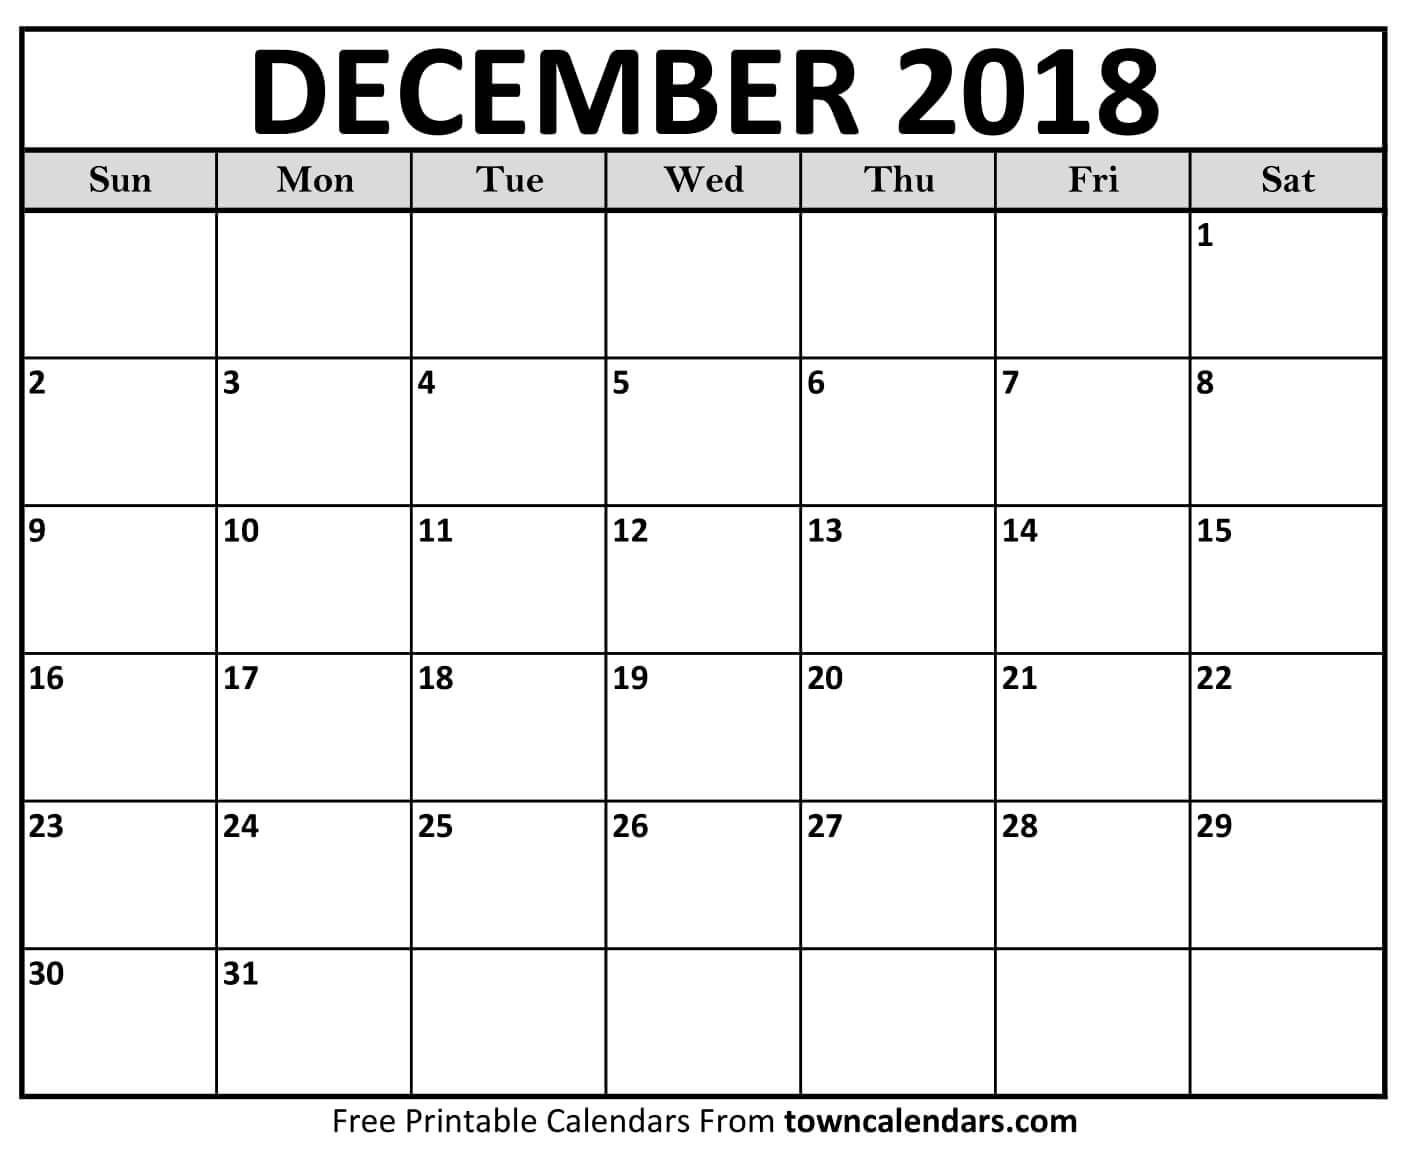 Monthly Calendar December 2018 Template Free Download Monthly Calendar Of December